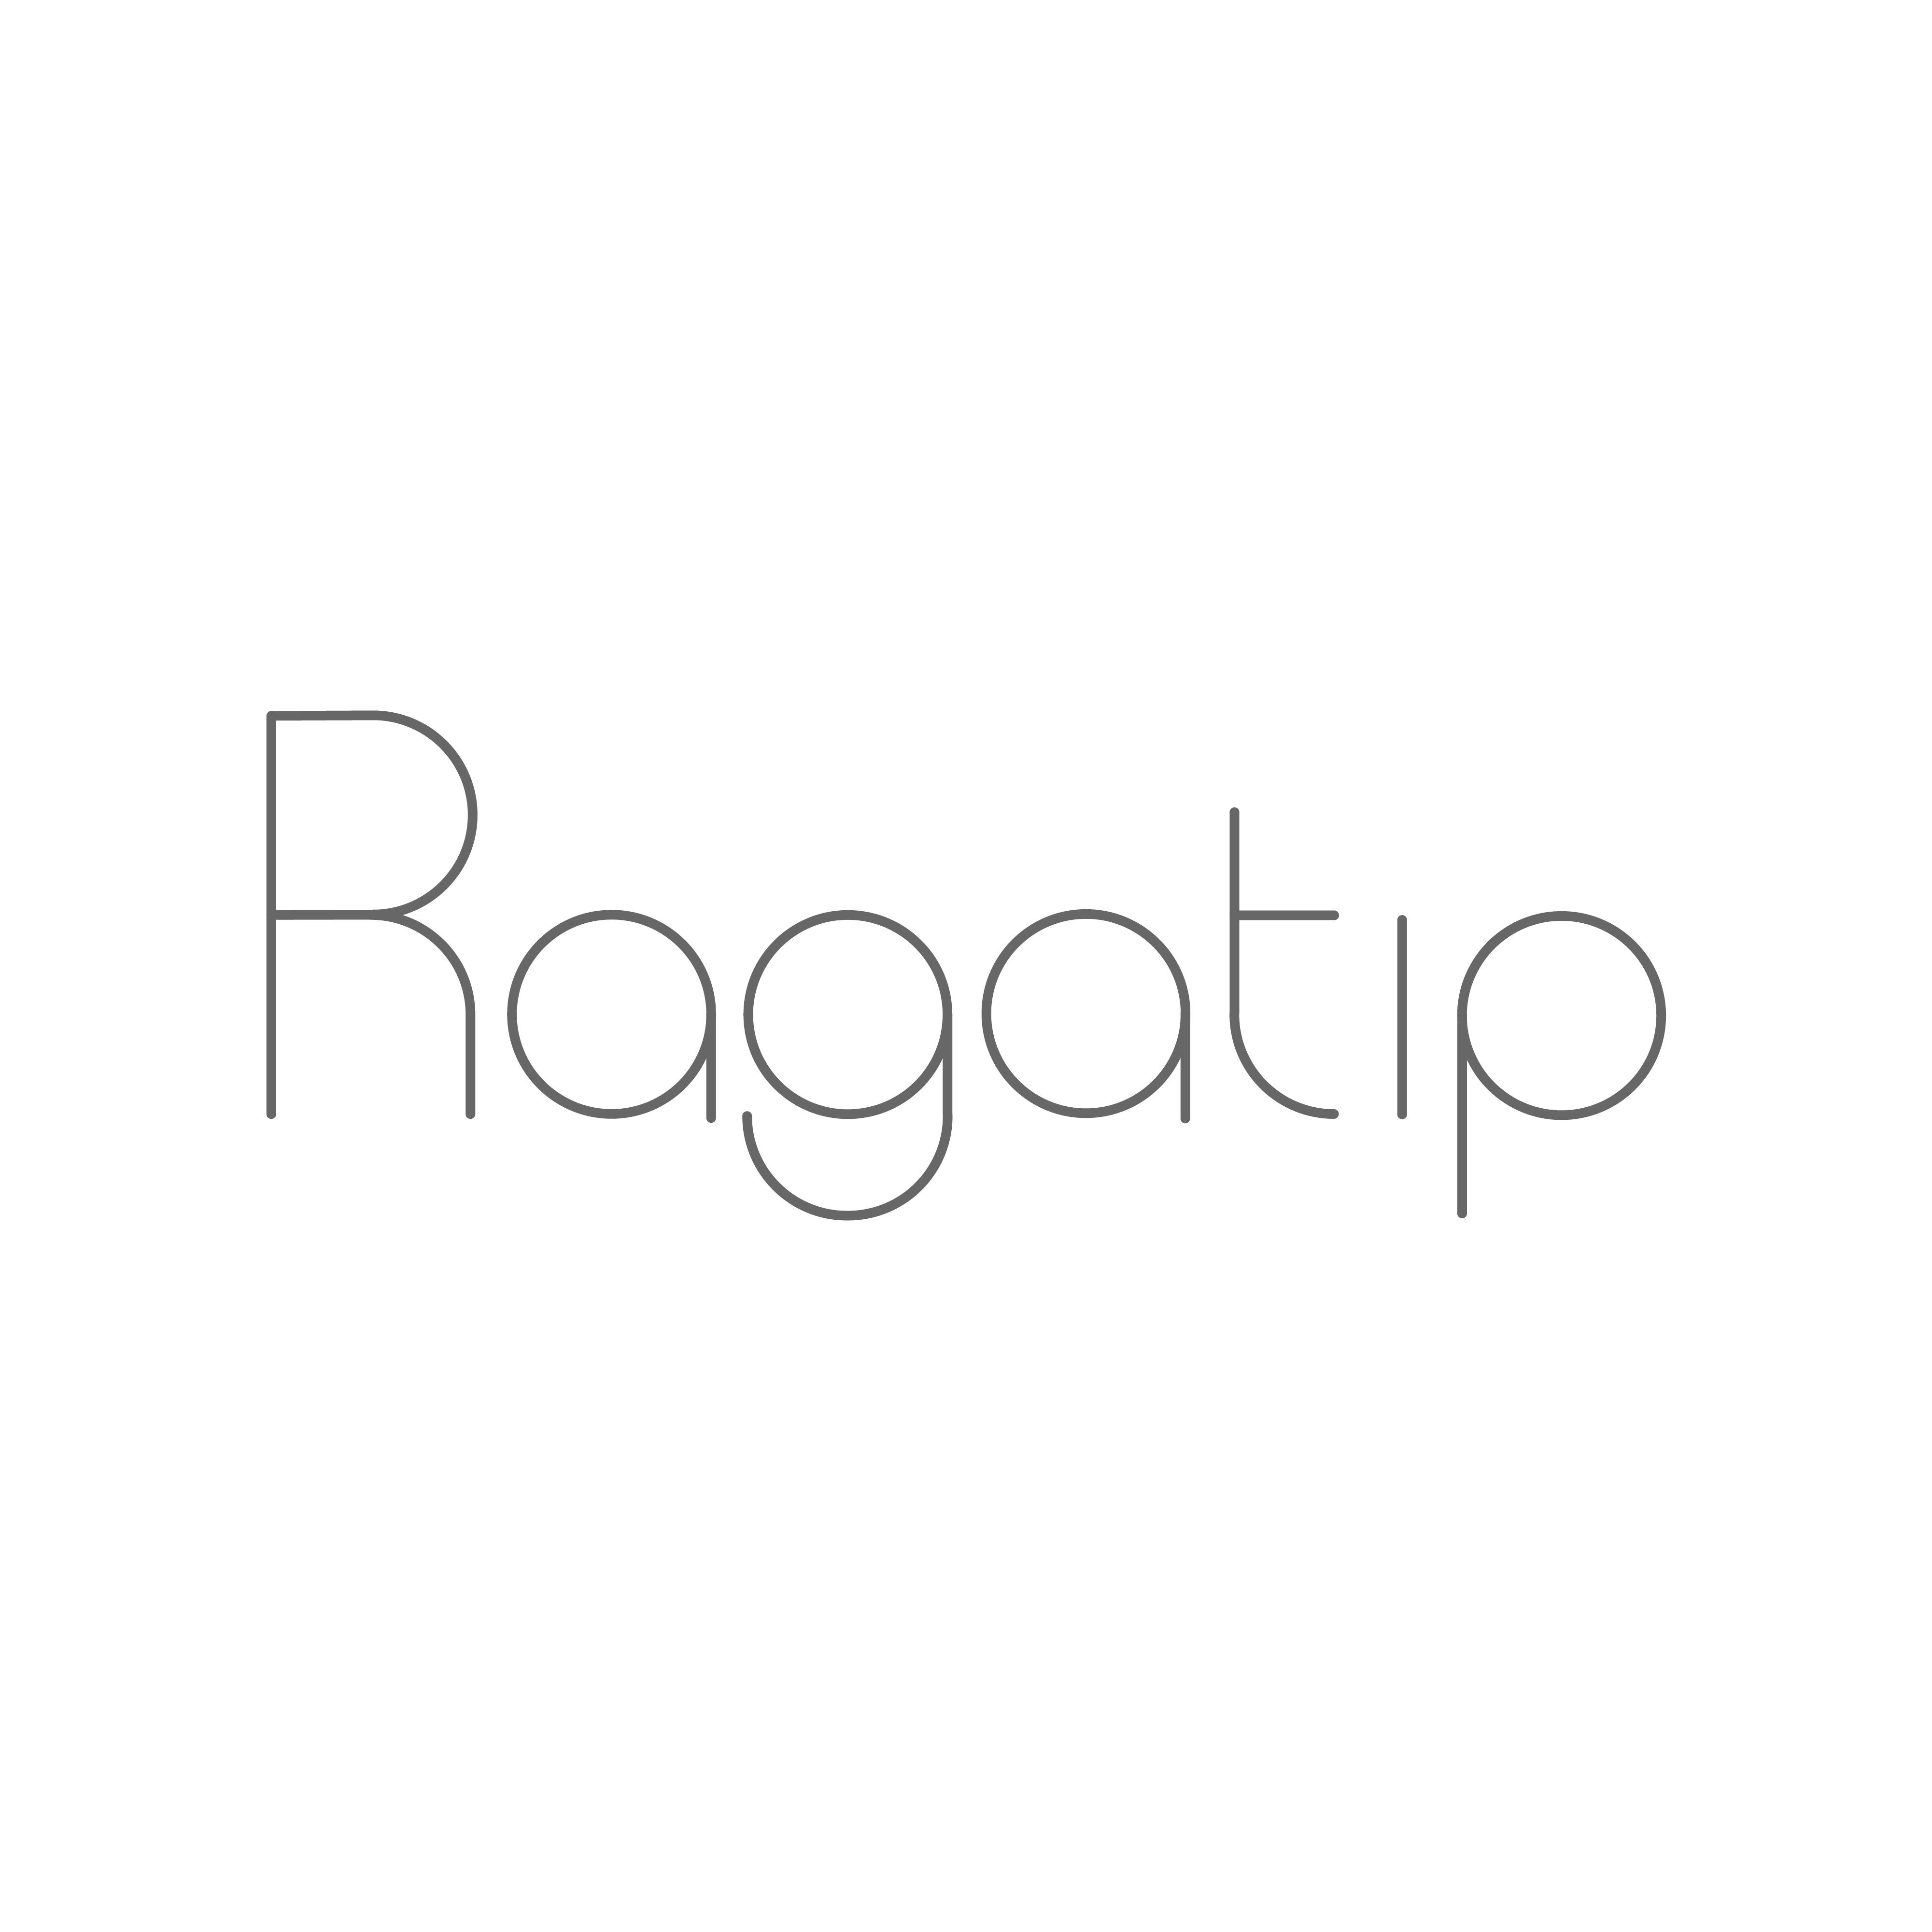 A Cardboard Creative Client called Ragatip